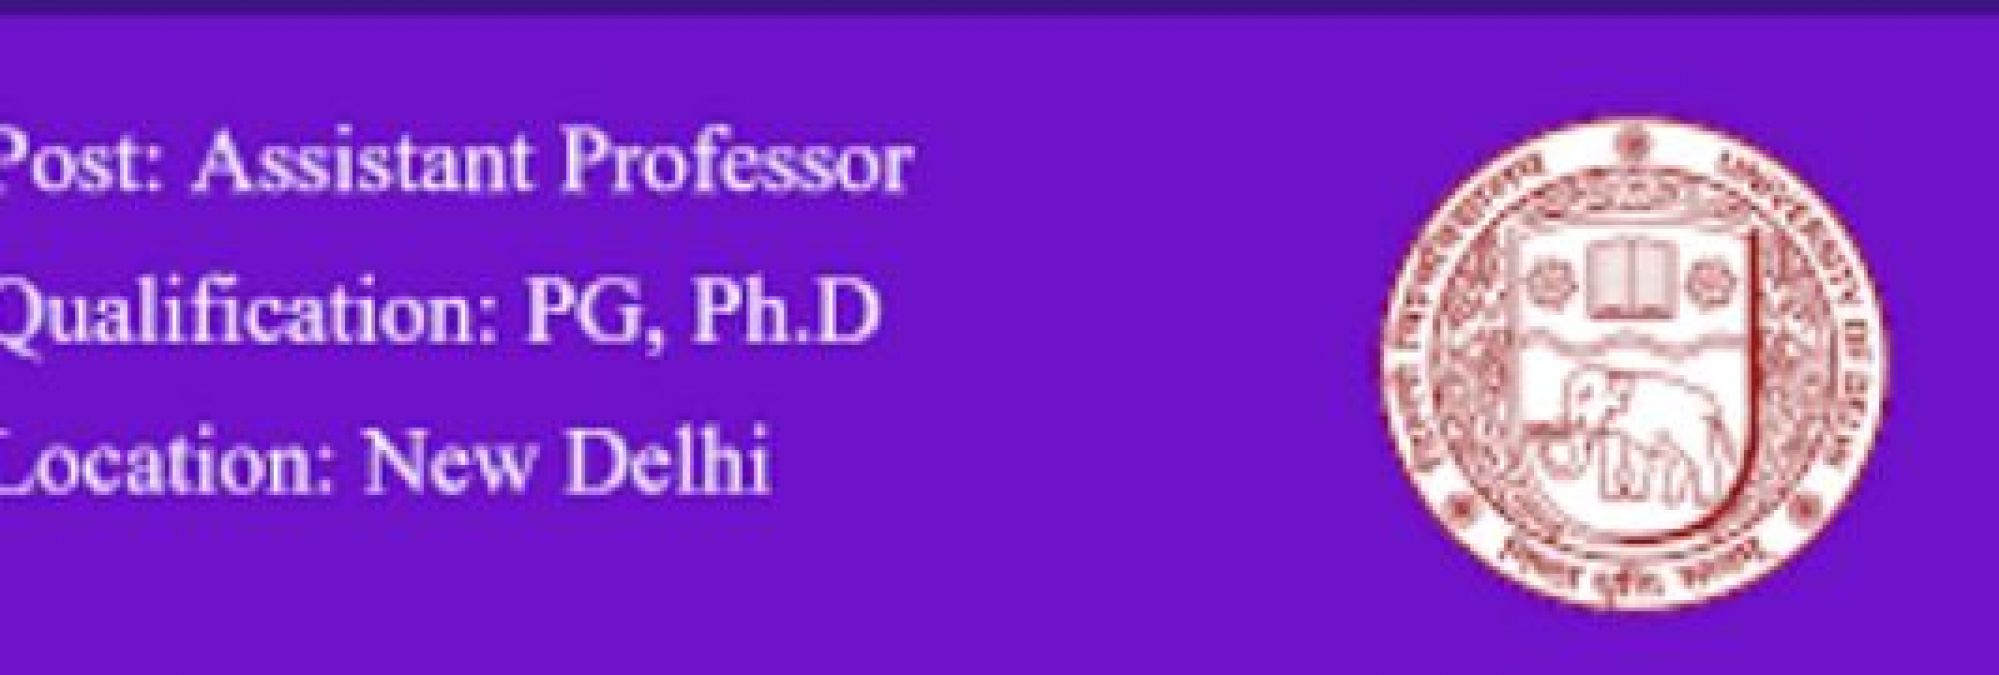 Recruitment for the post of Assistant Professor in Delhi University, here's last date